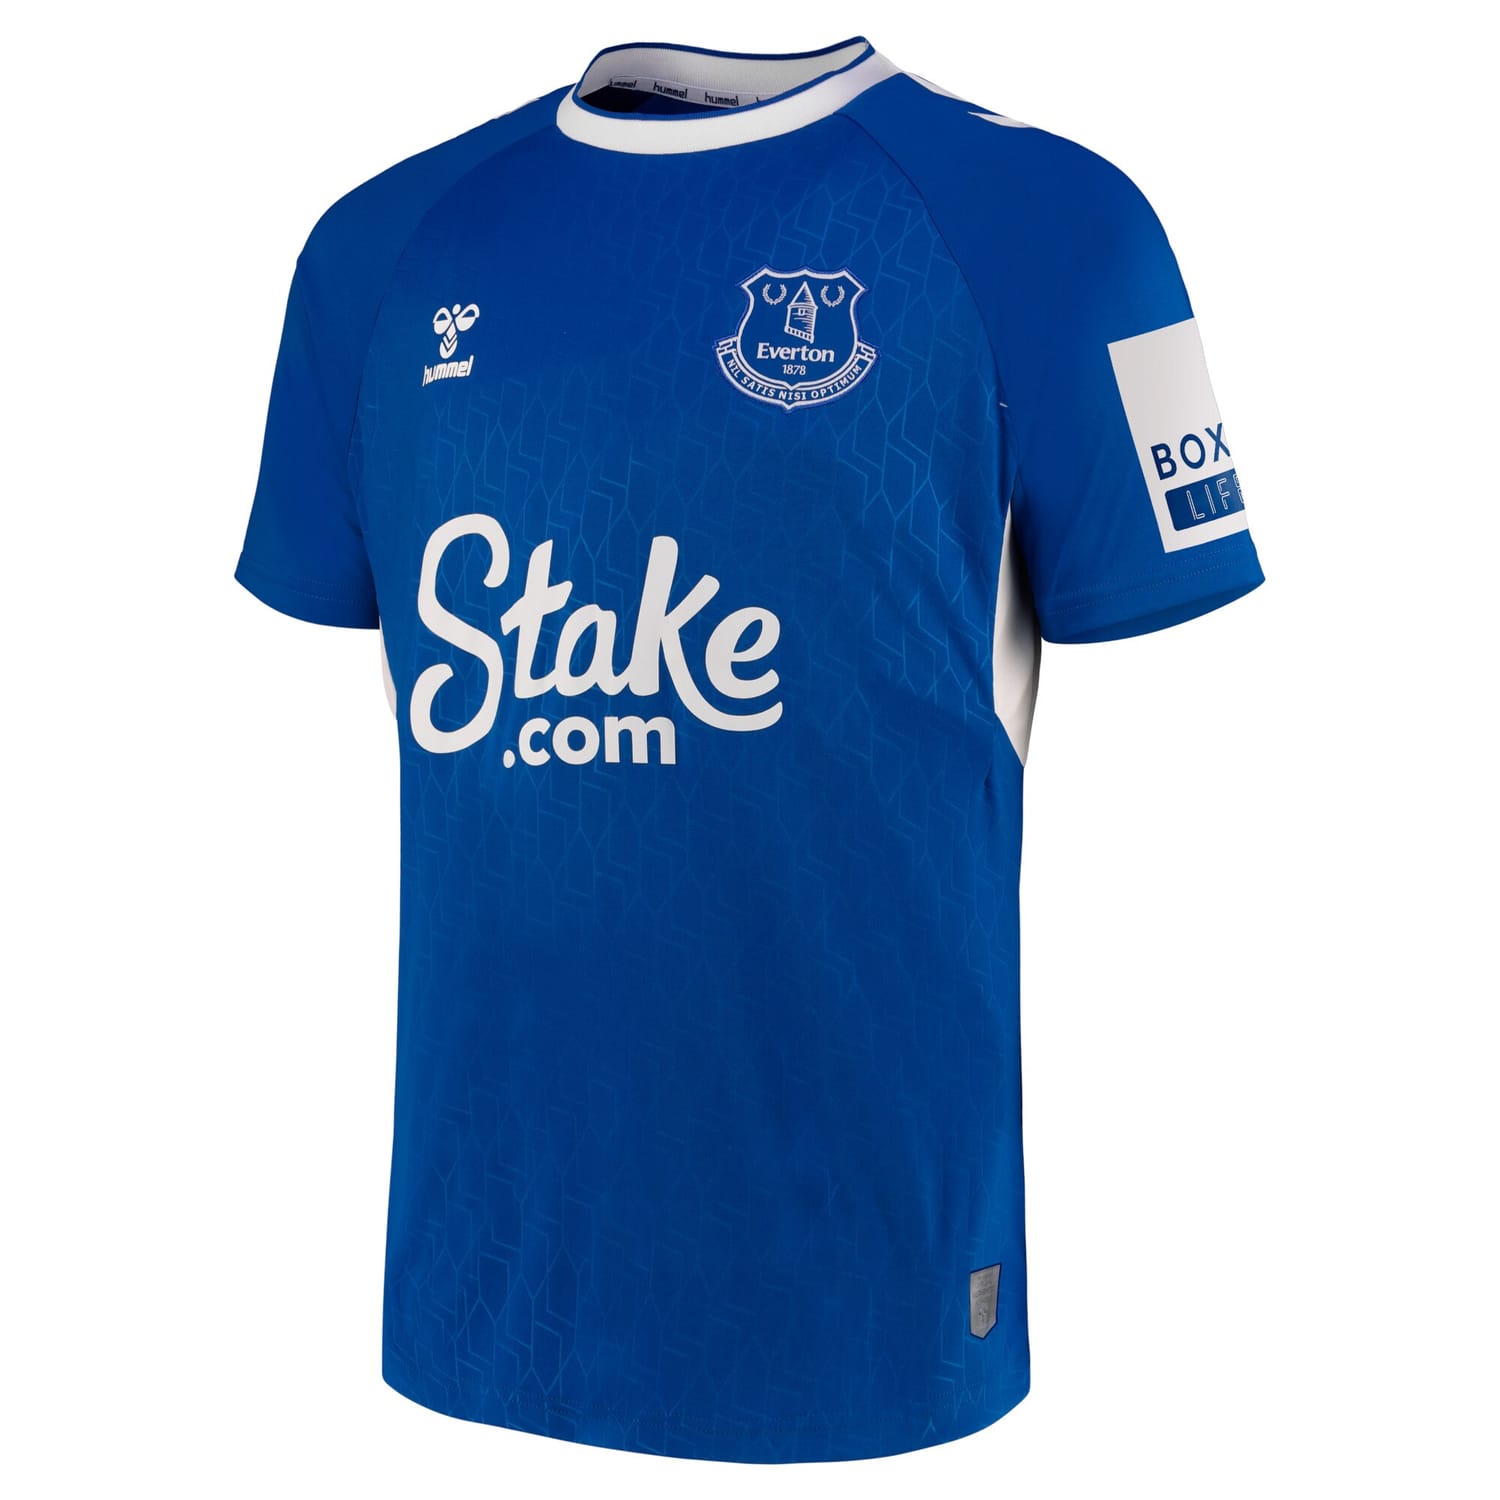 Premier League Everton Home Jersey Shirt 2022-23 player Katja Snoeijs 25 printing for Men